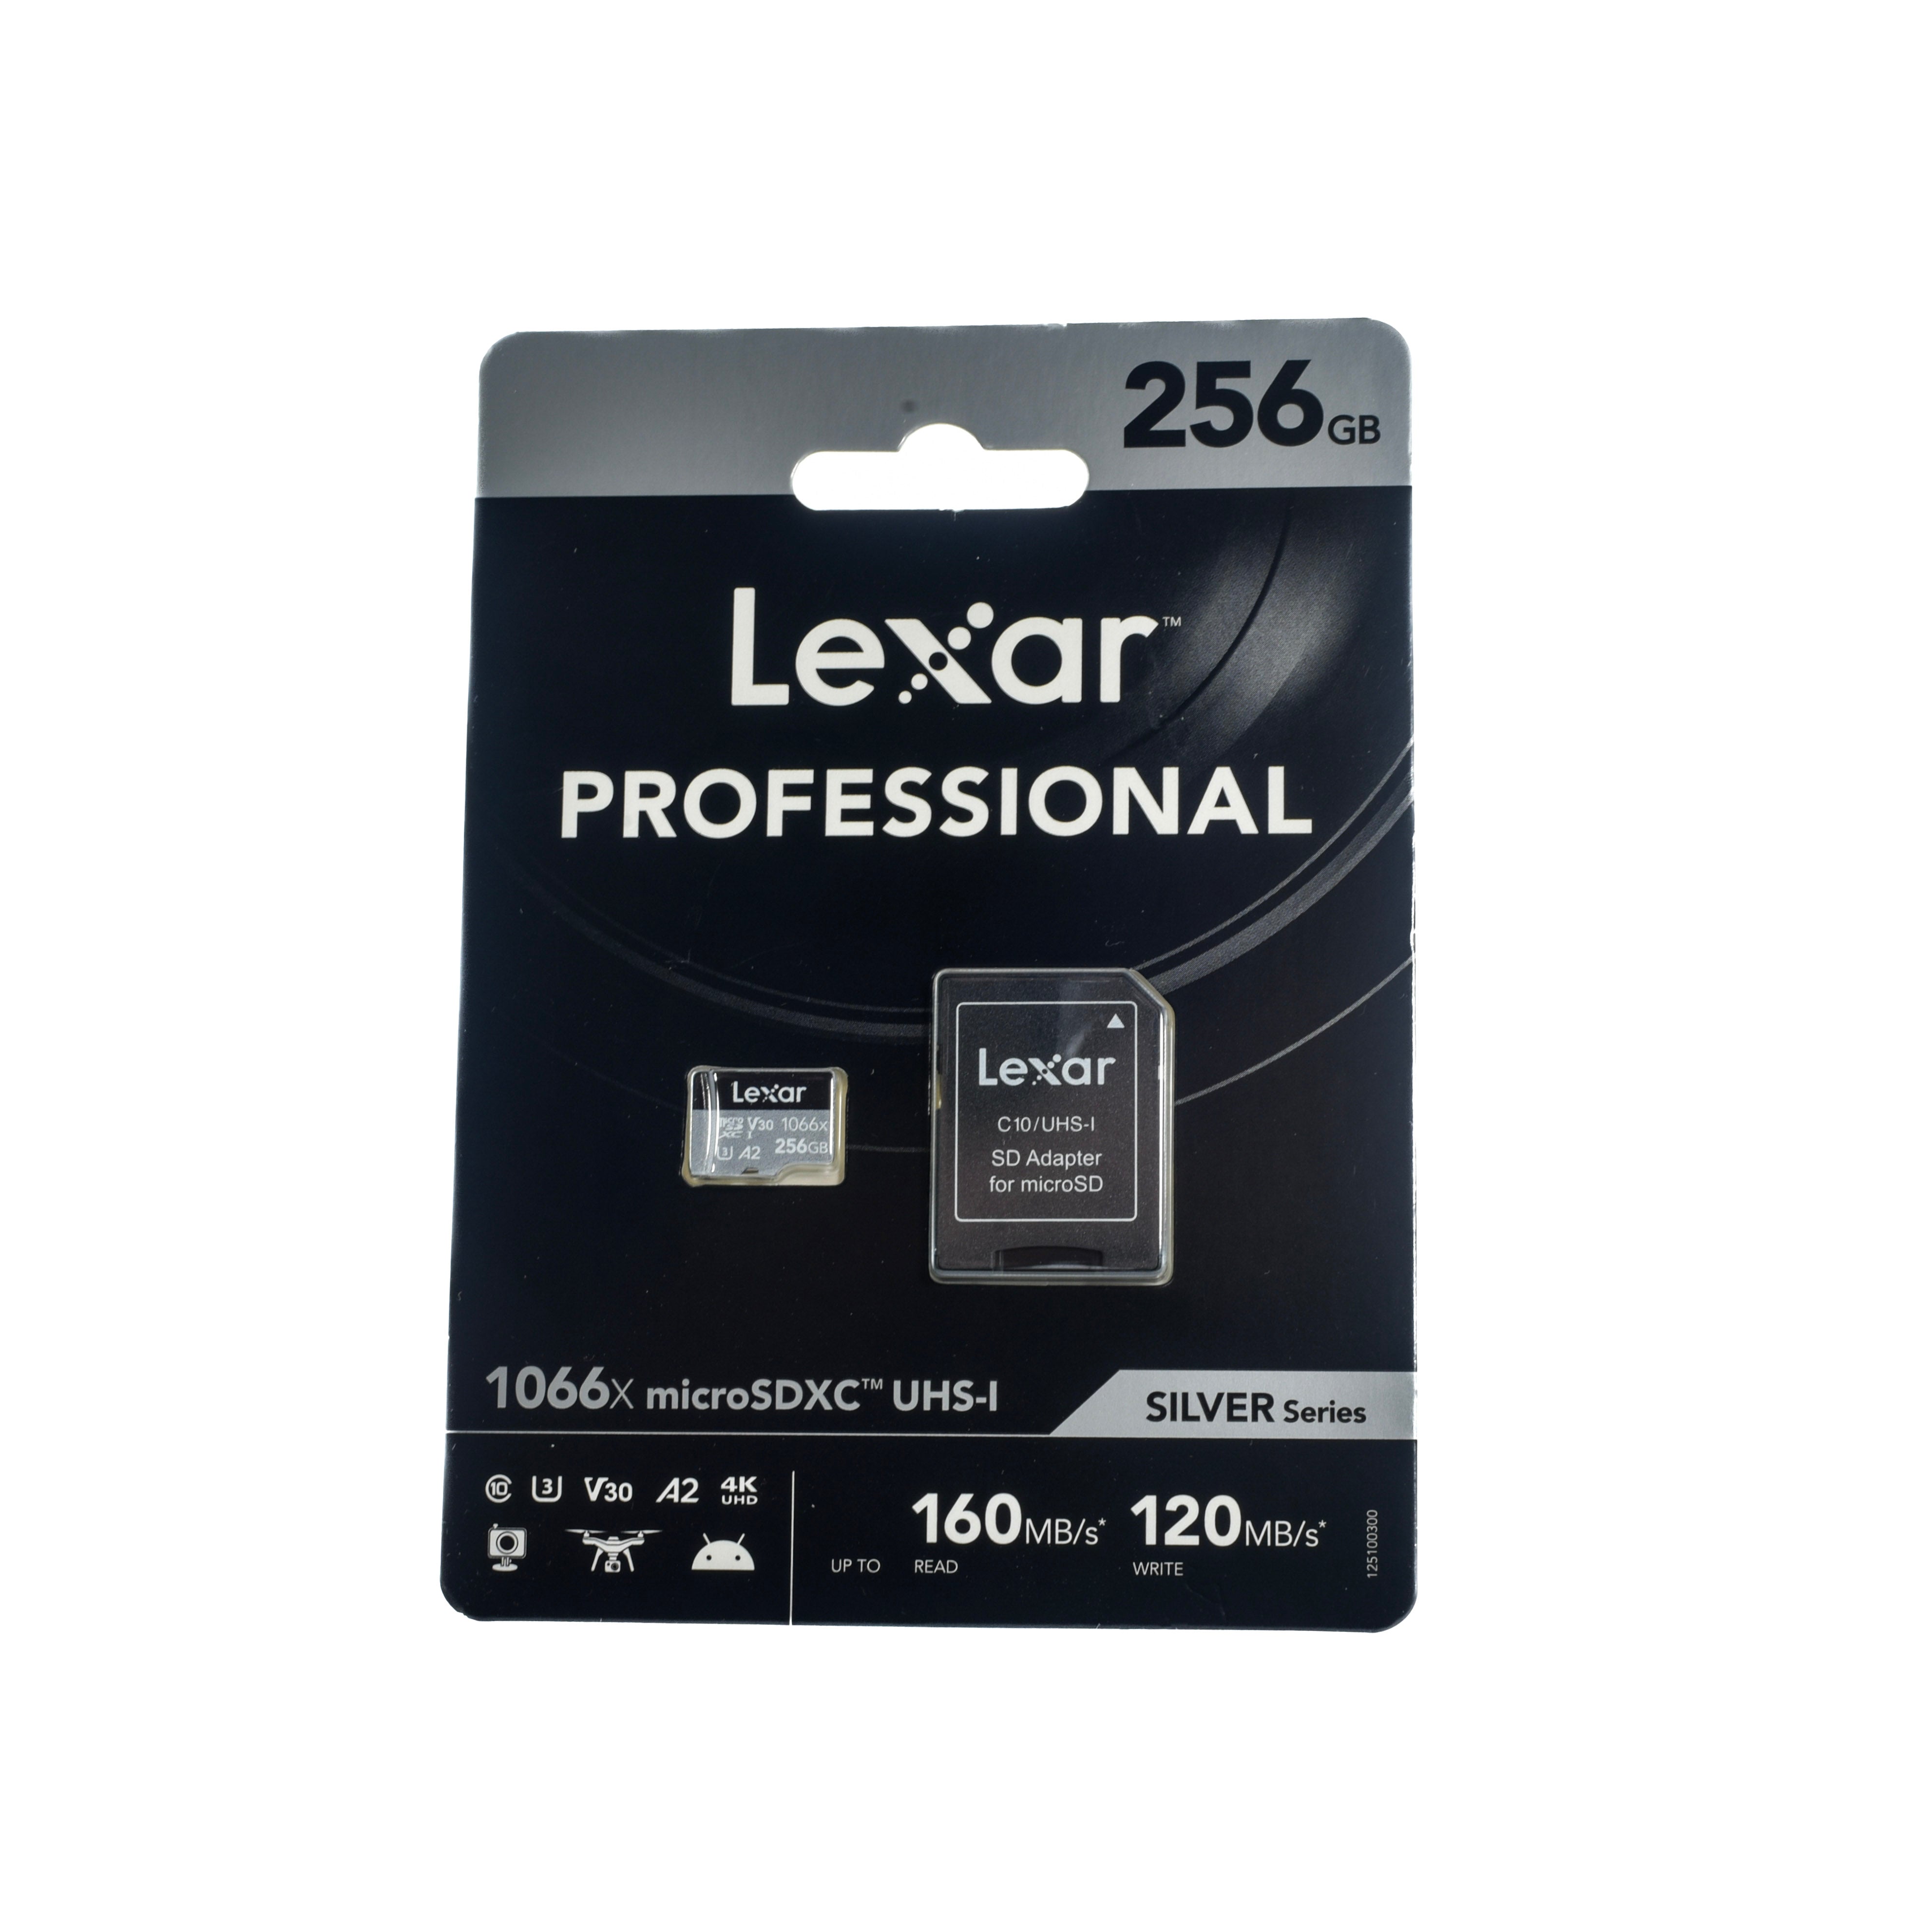 Lexar 256 GB Micro SDXC Card Professional UHS-1 (Silver Series)